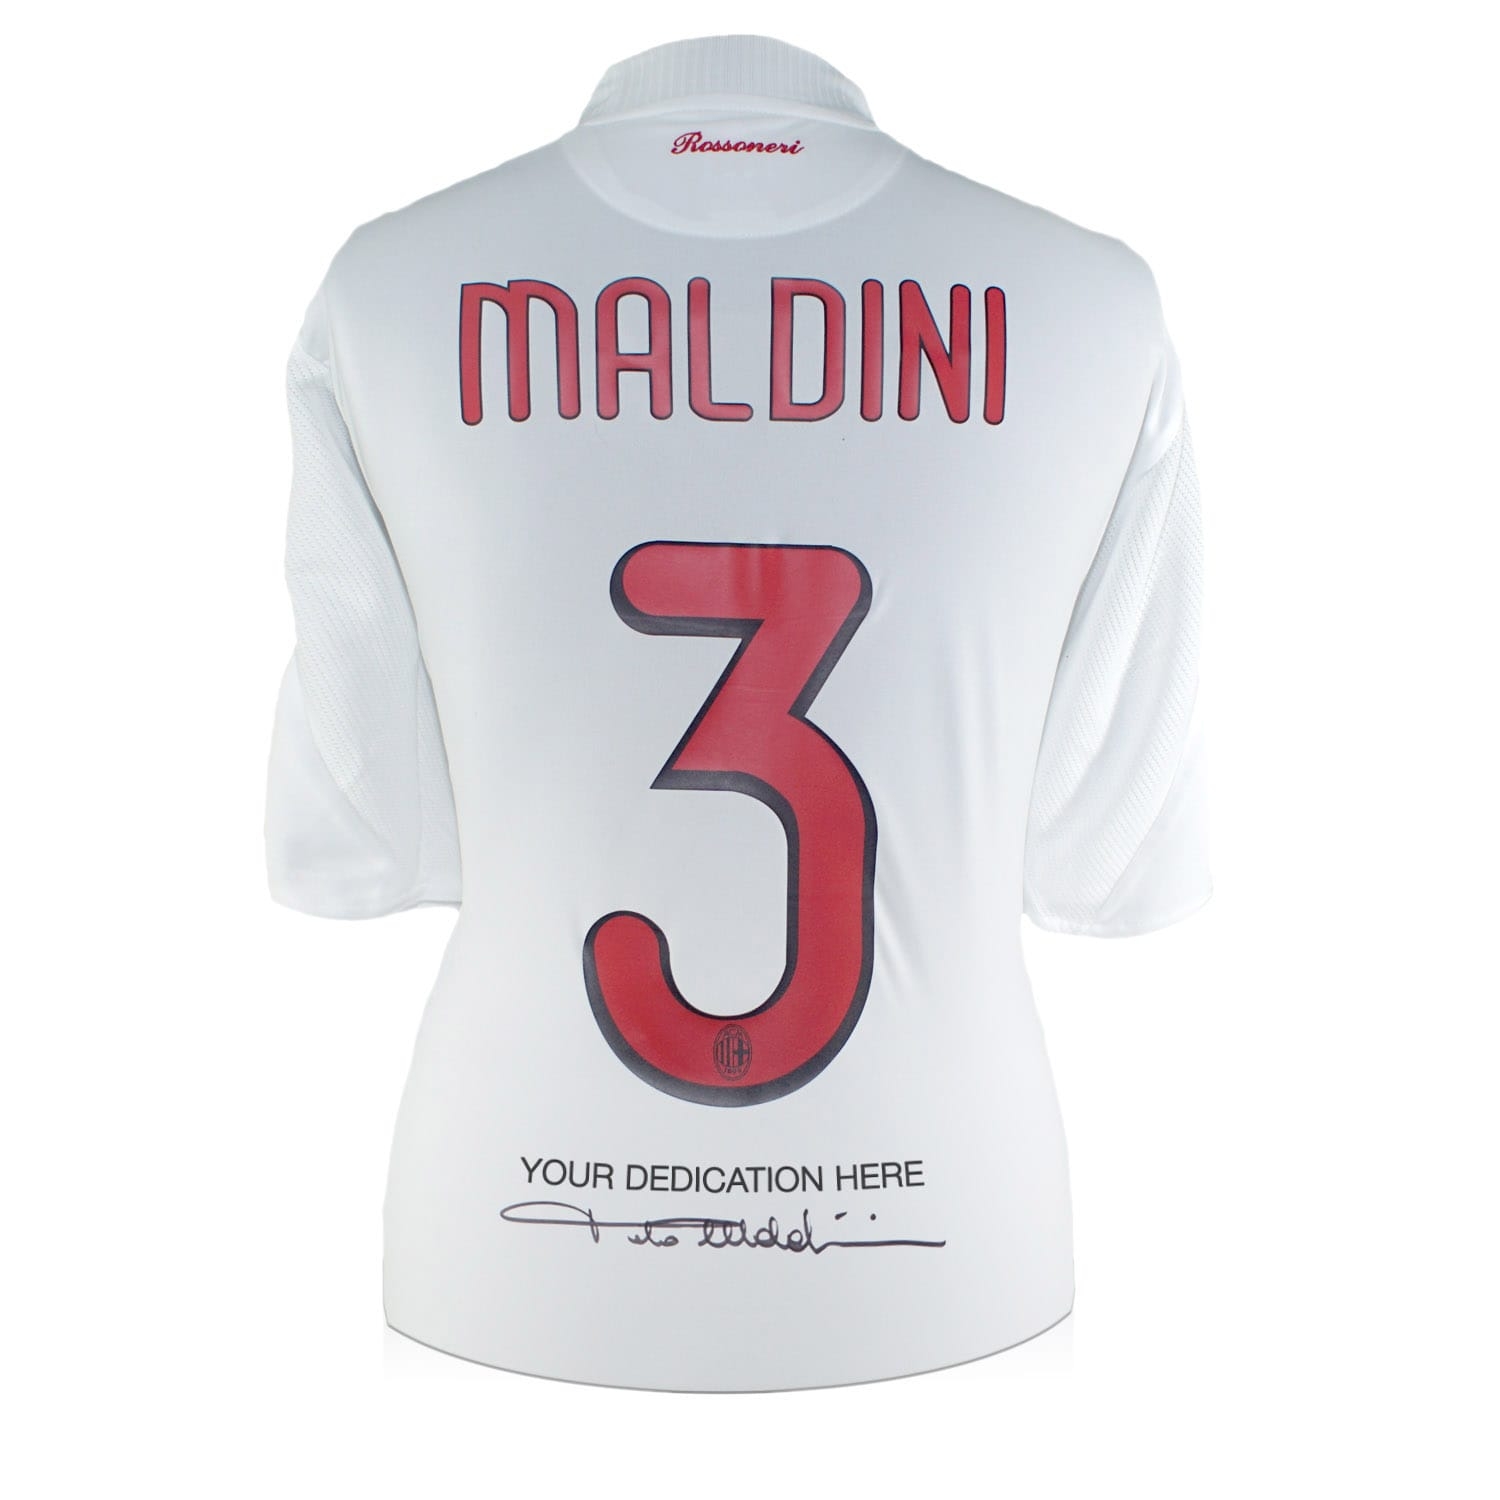 Paolo Maldini dedicated shirt